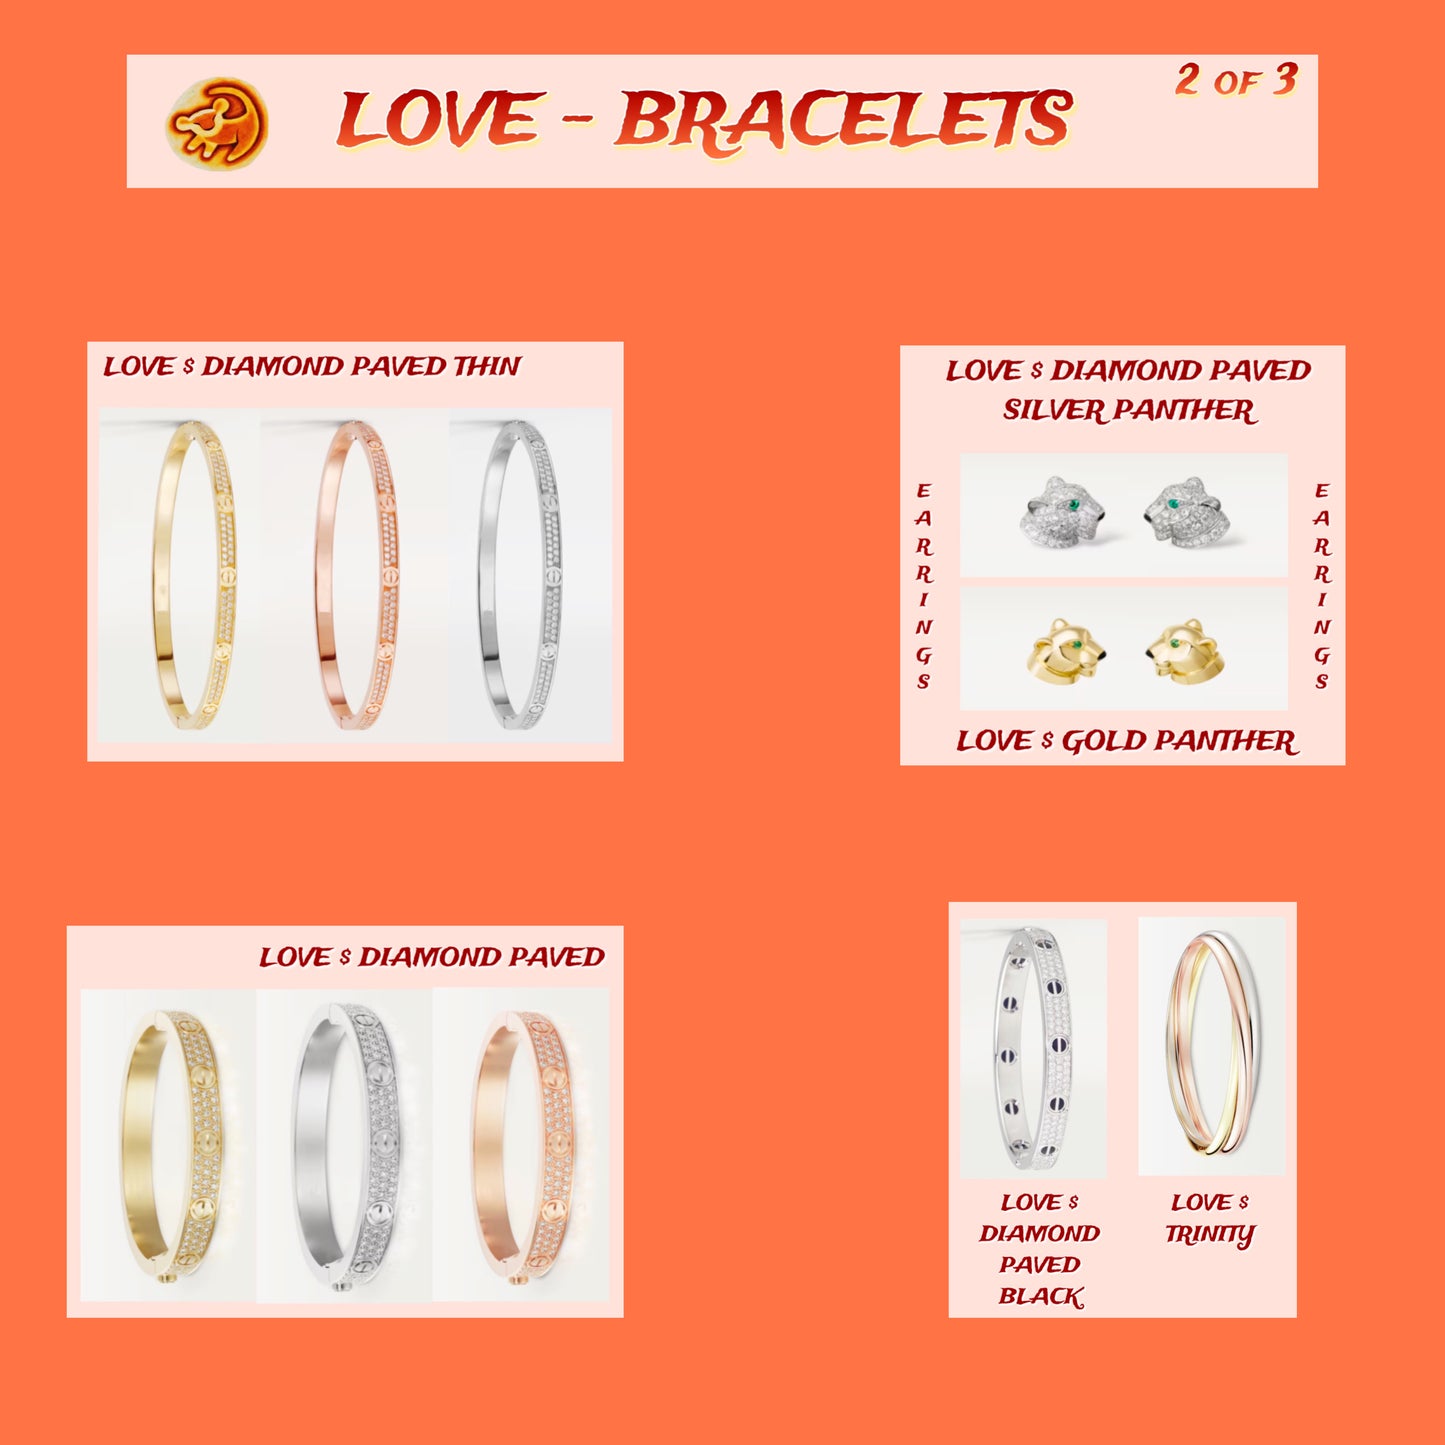 Stock - Love Bracelets 2 of 3